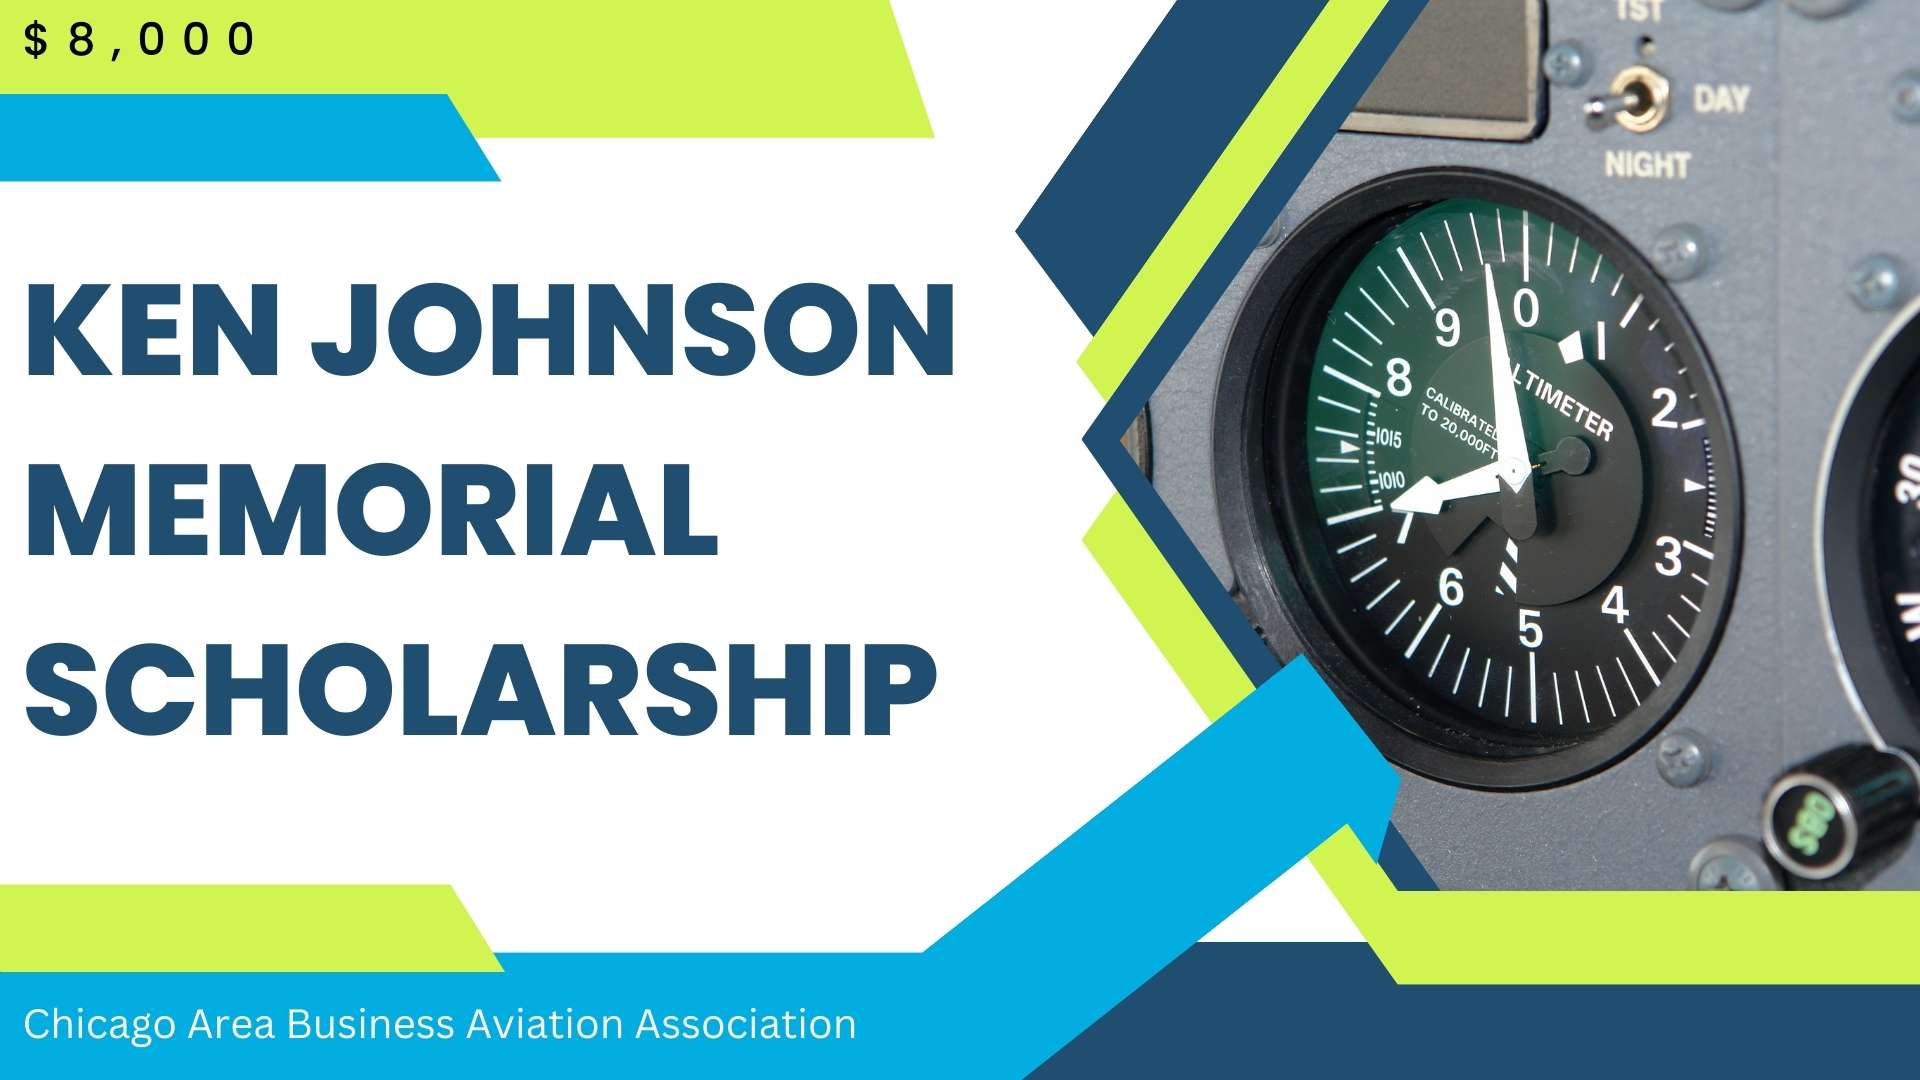 Ken Johnson Memorial Scholarship